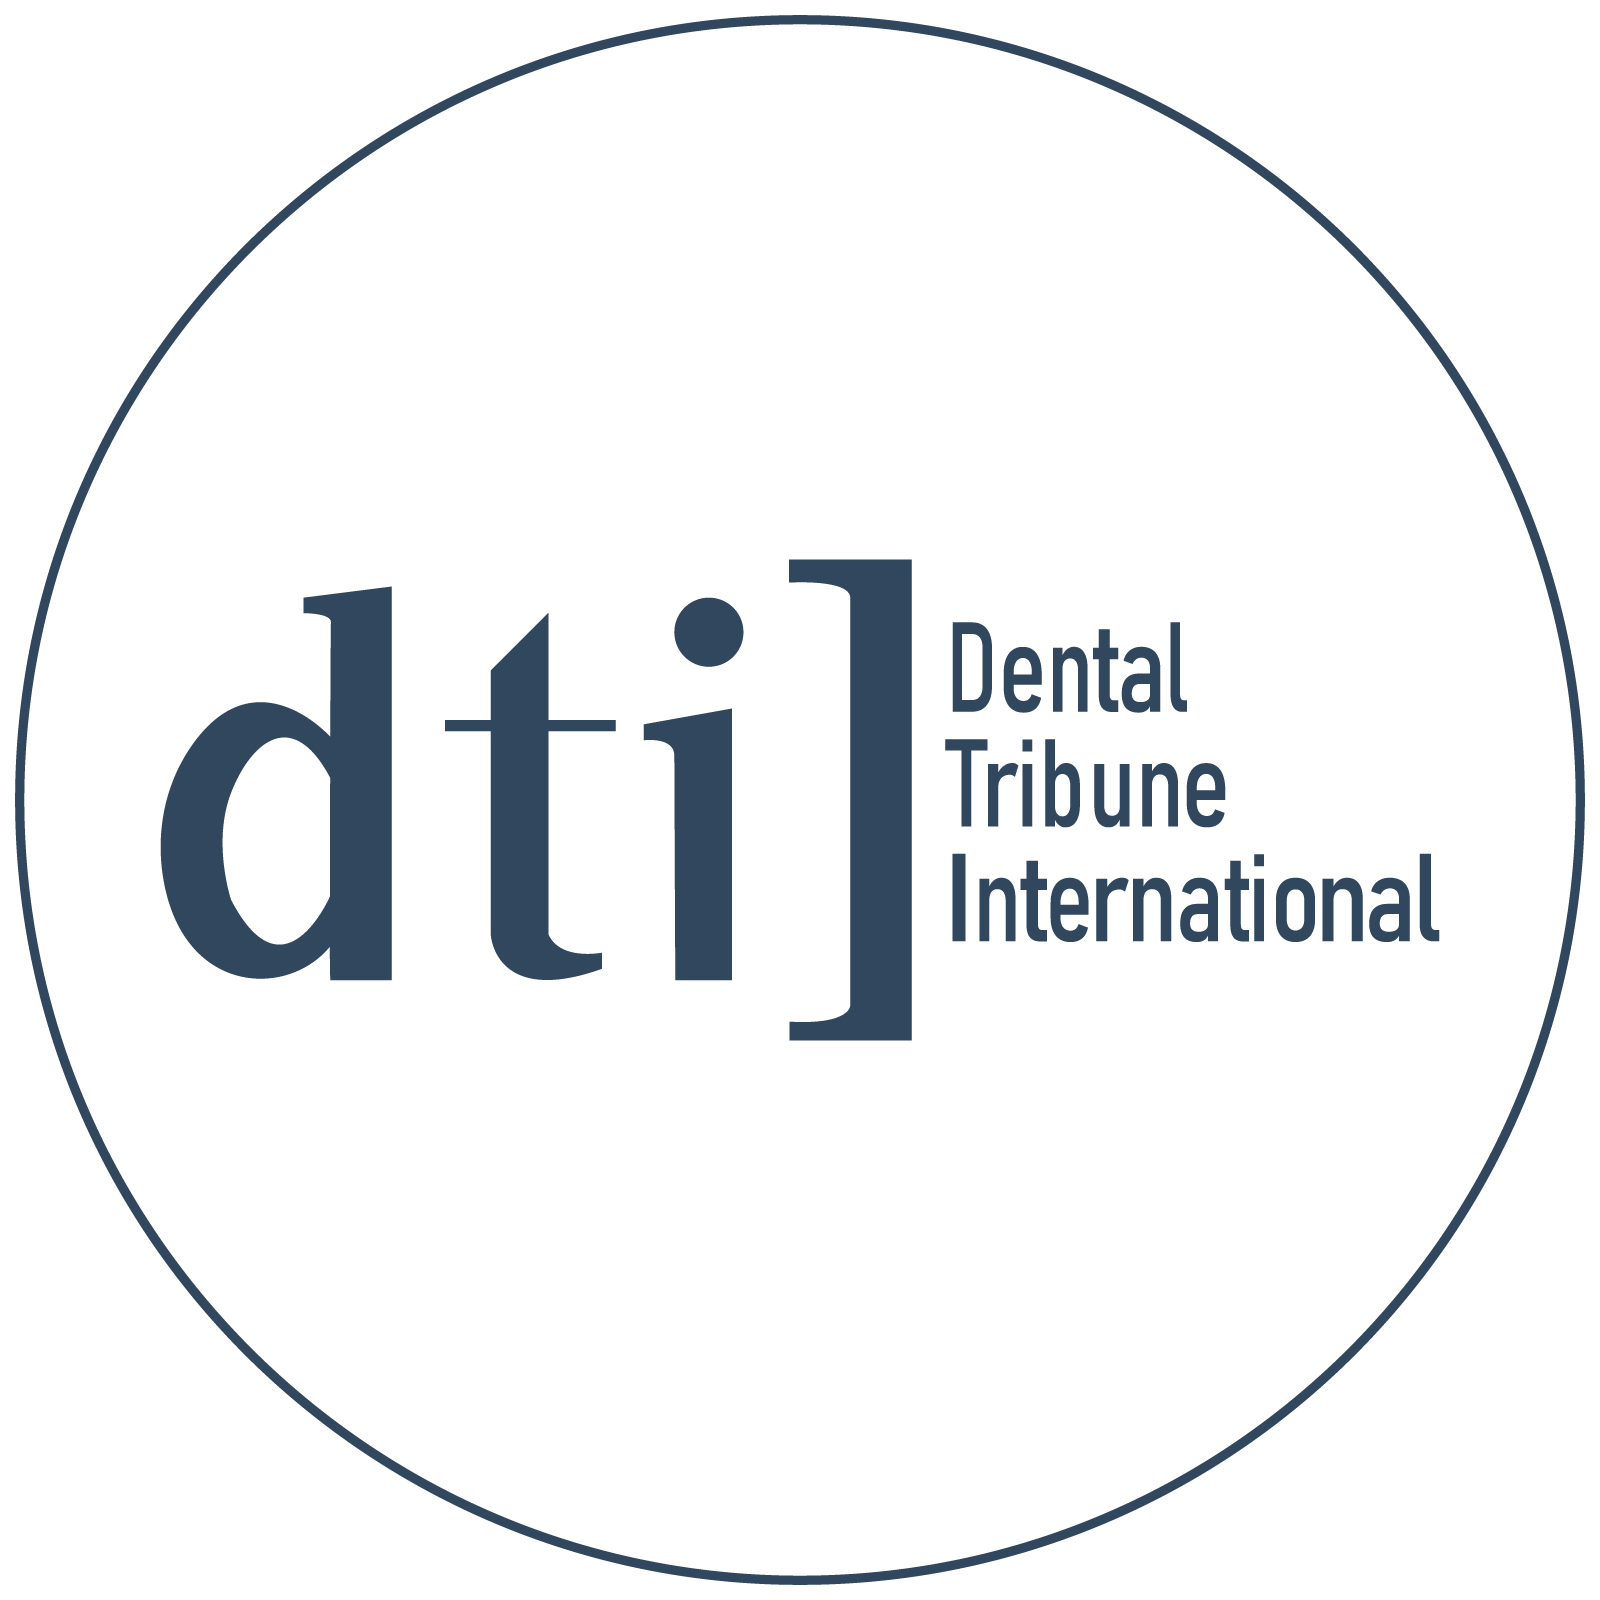 Dental Tribune International logo